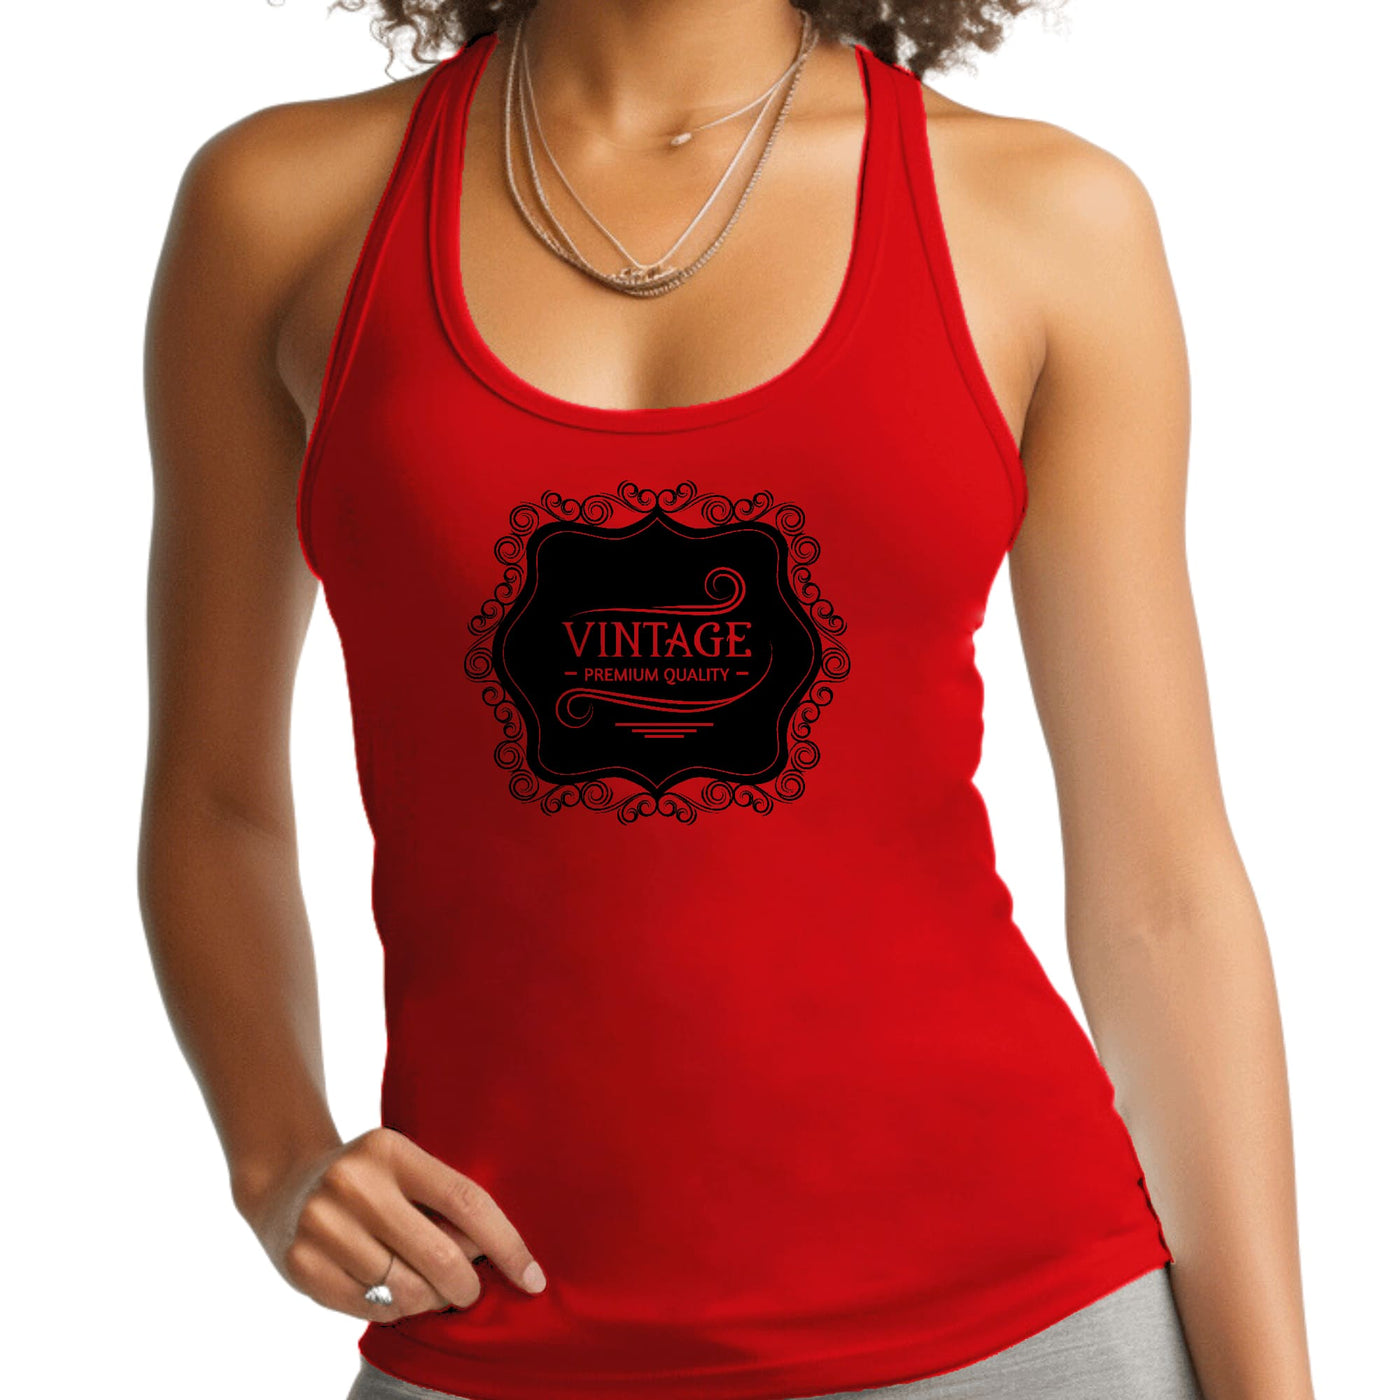 Womens Fitness Tank Top Graphic T-shirt Vintage Premium Quality Black - Womens